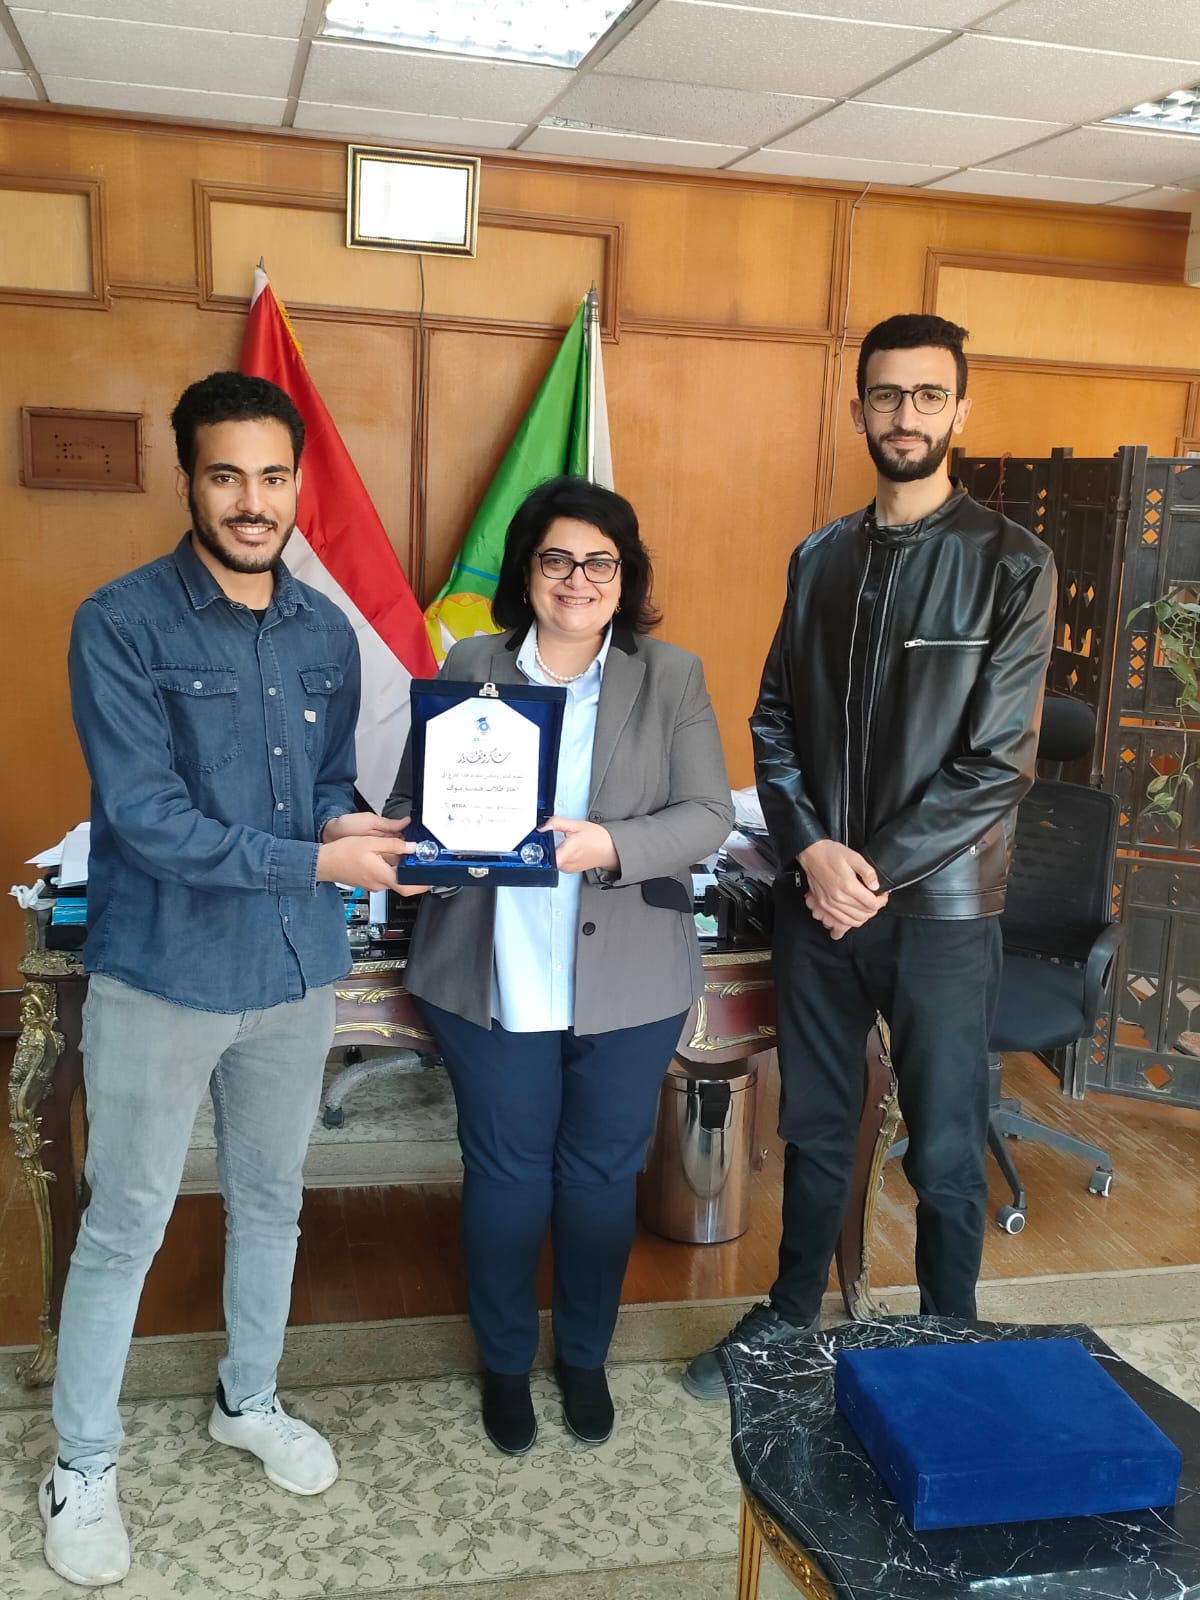 Dedicating the Robotics Shield to Prof. Dr. Nancy Asaad